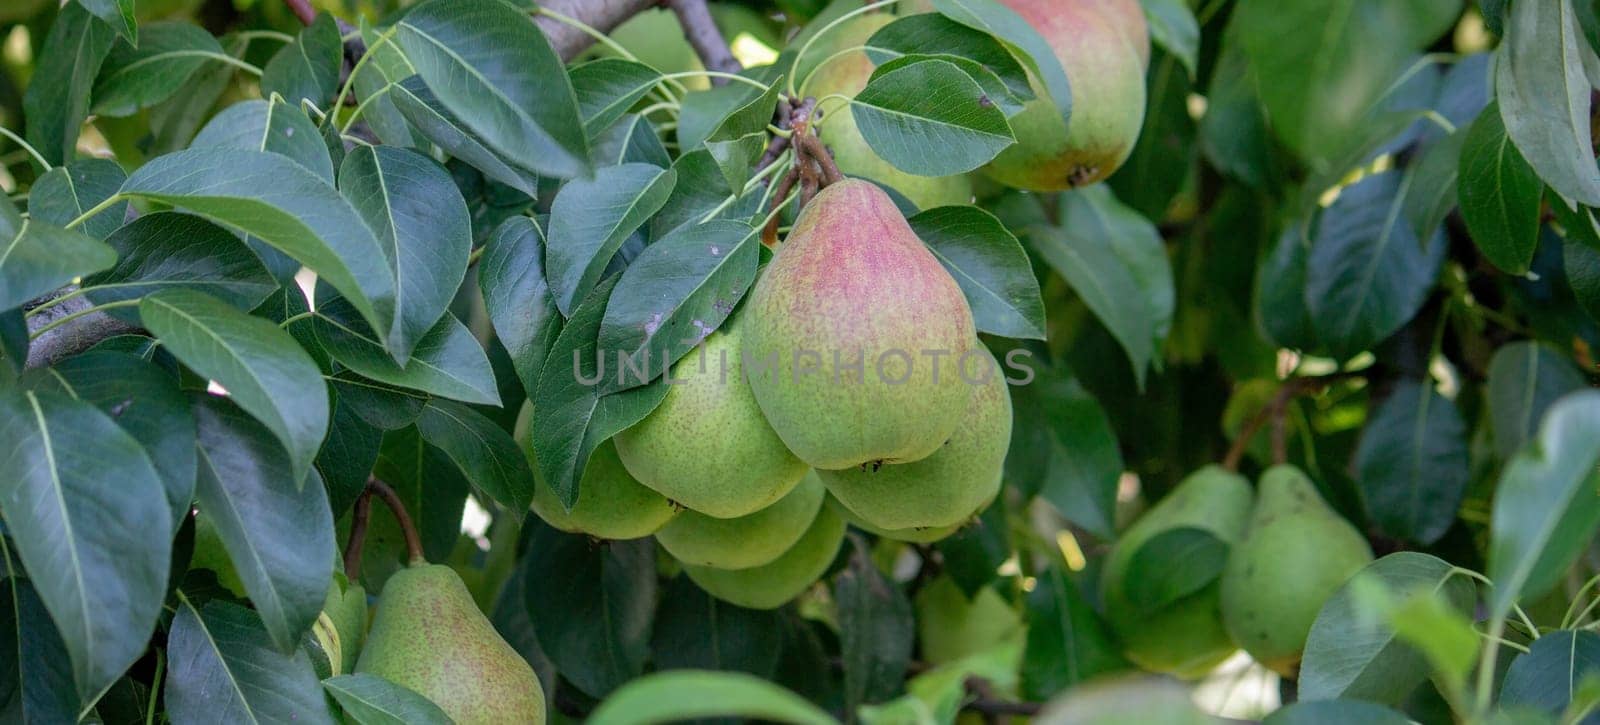 pears grow on a tree, harvest. Selective focus. by Anuta23